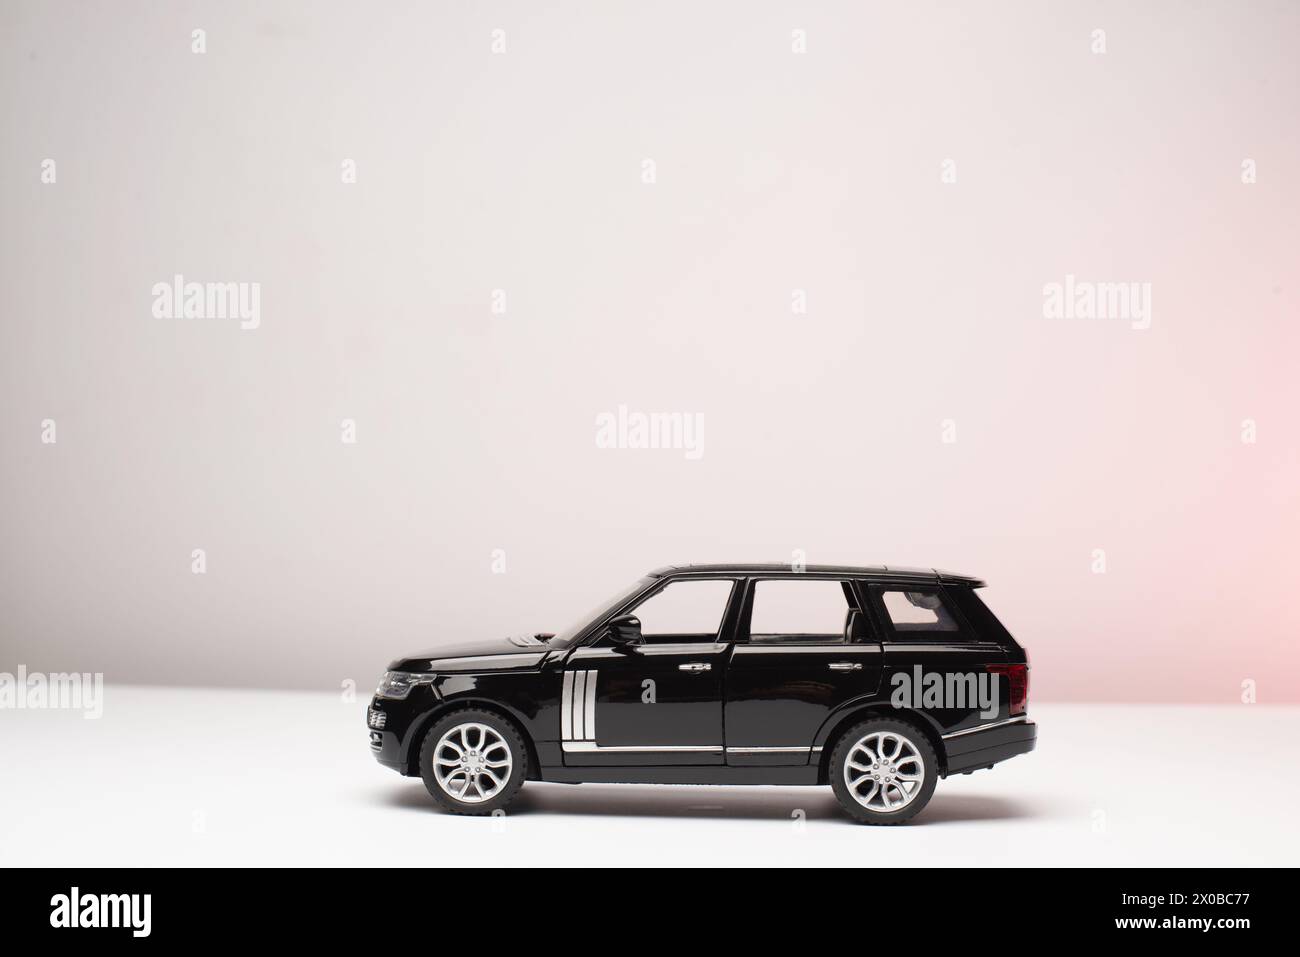 Black Toy car isolated on white background Stock Photo